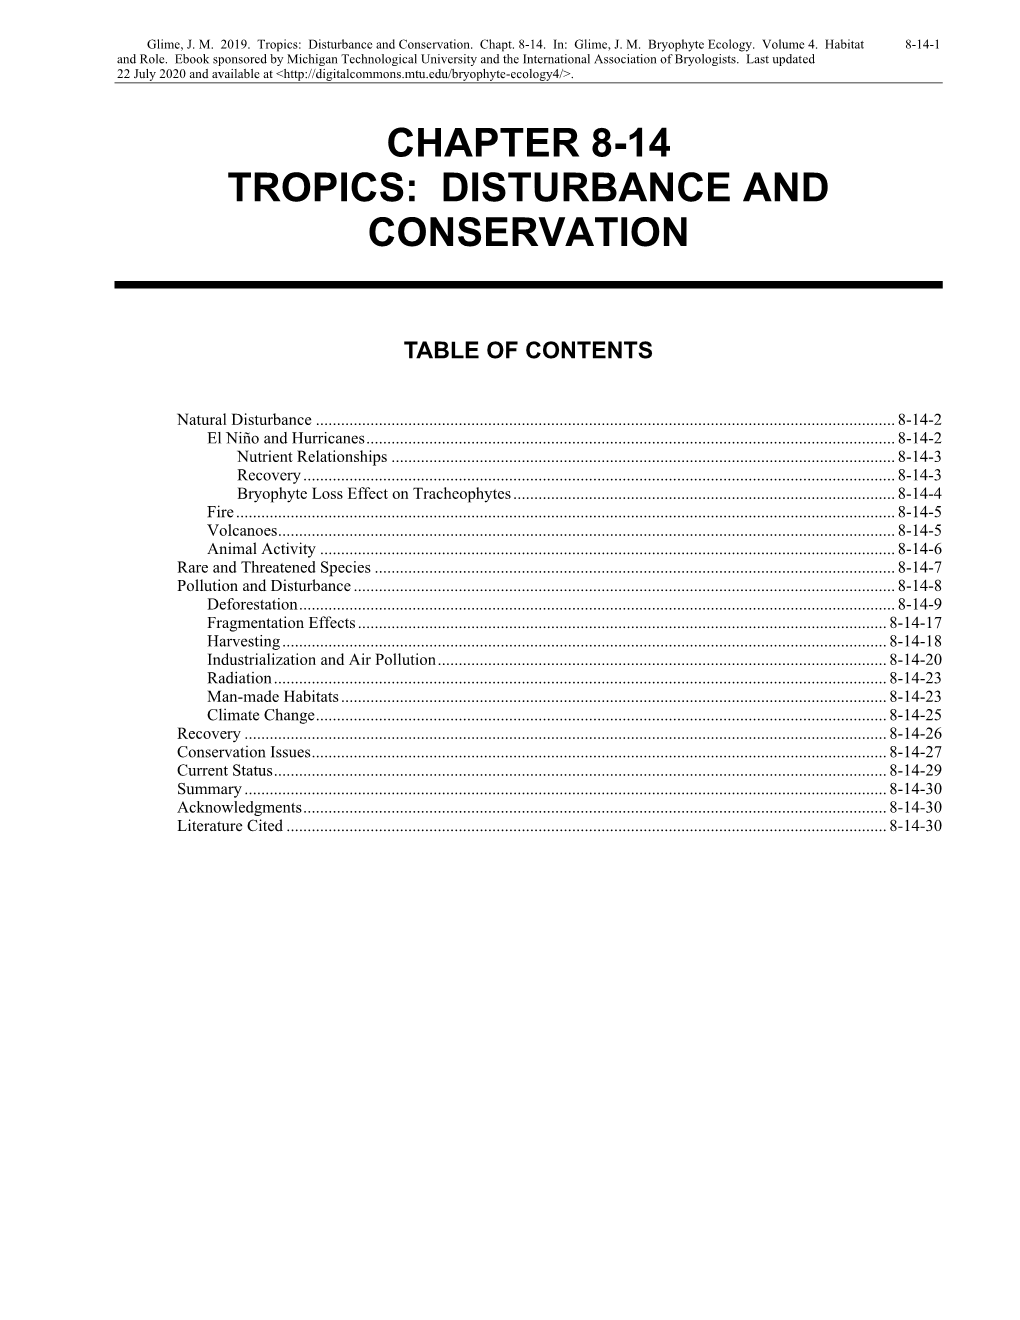 Volume 4, Chapter 8-14: Tropics: Disturbance and Conservation